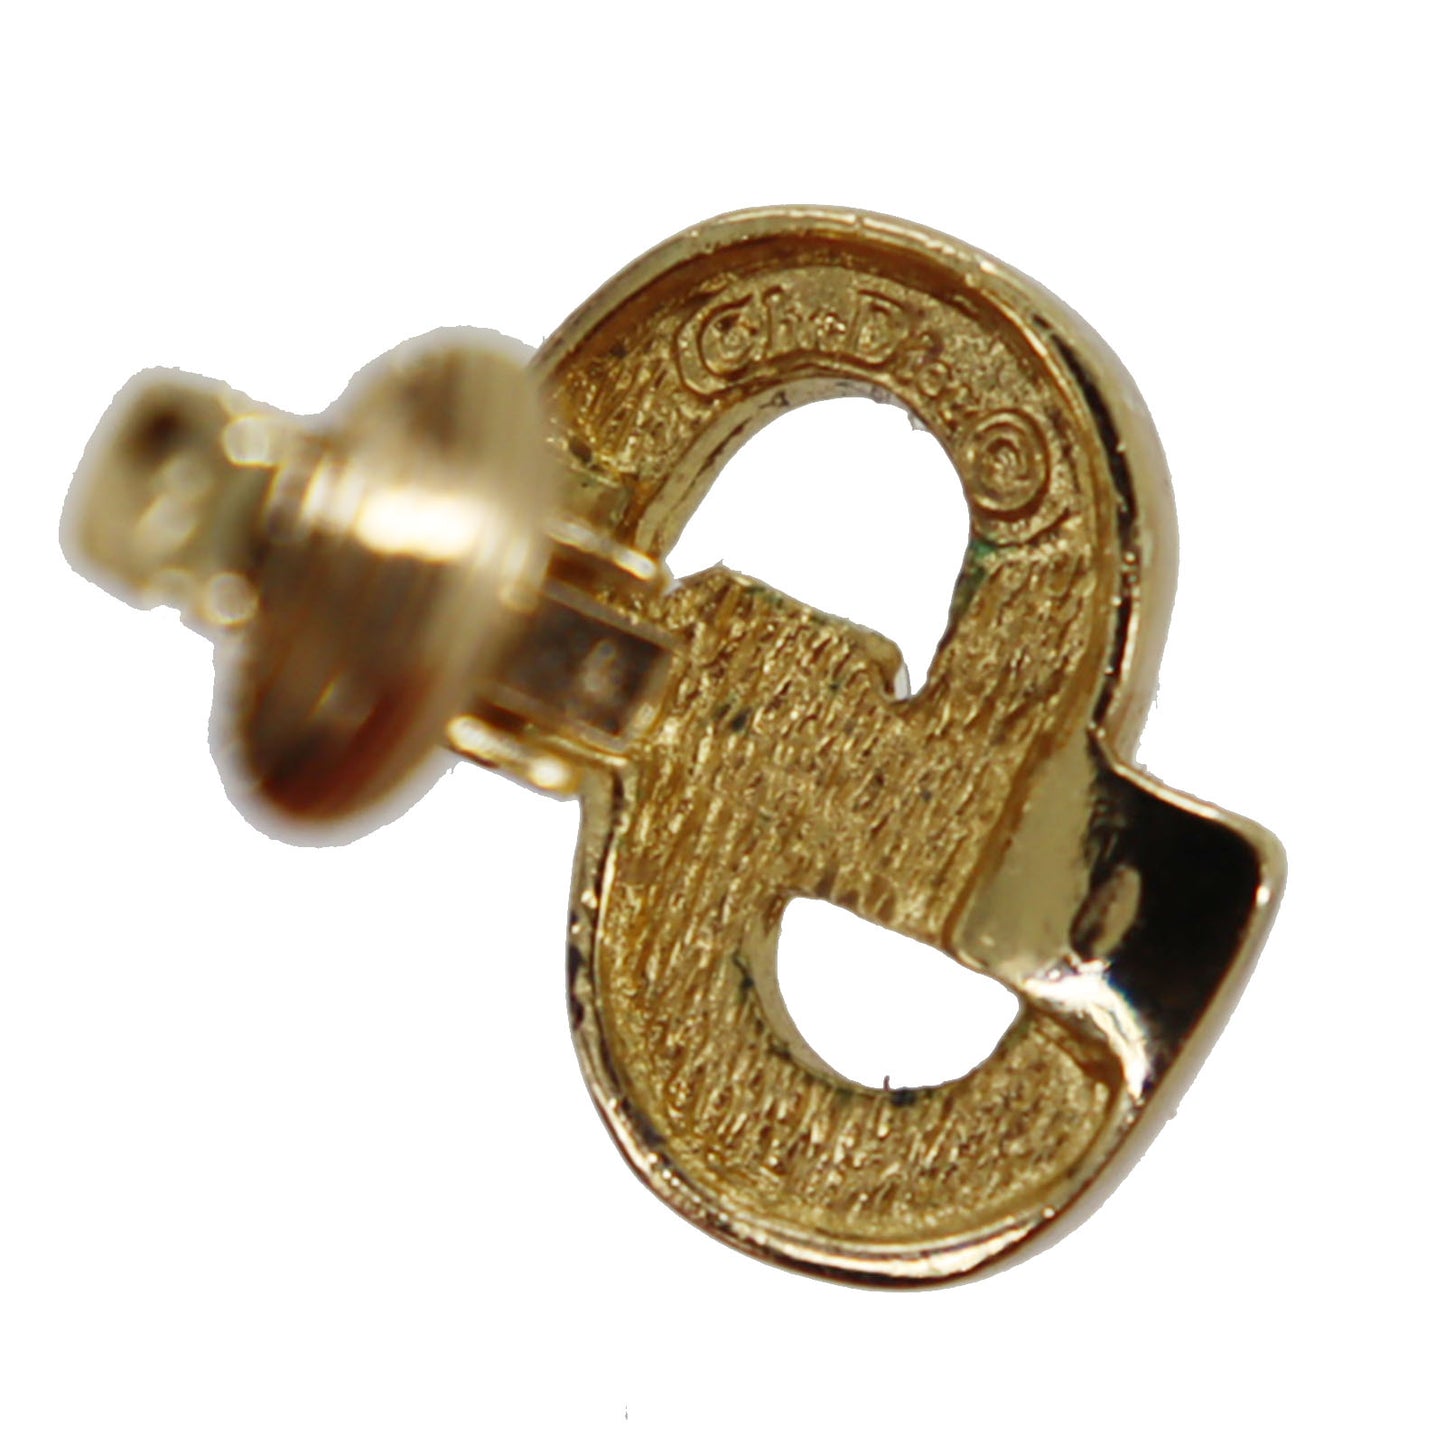 Christian Dior CD Logos Rhinestone Earrings Gold Plated #CB383